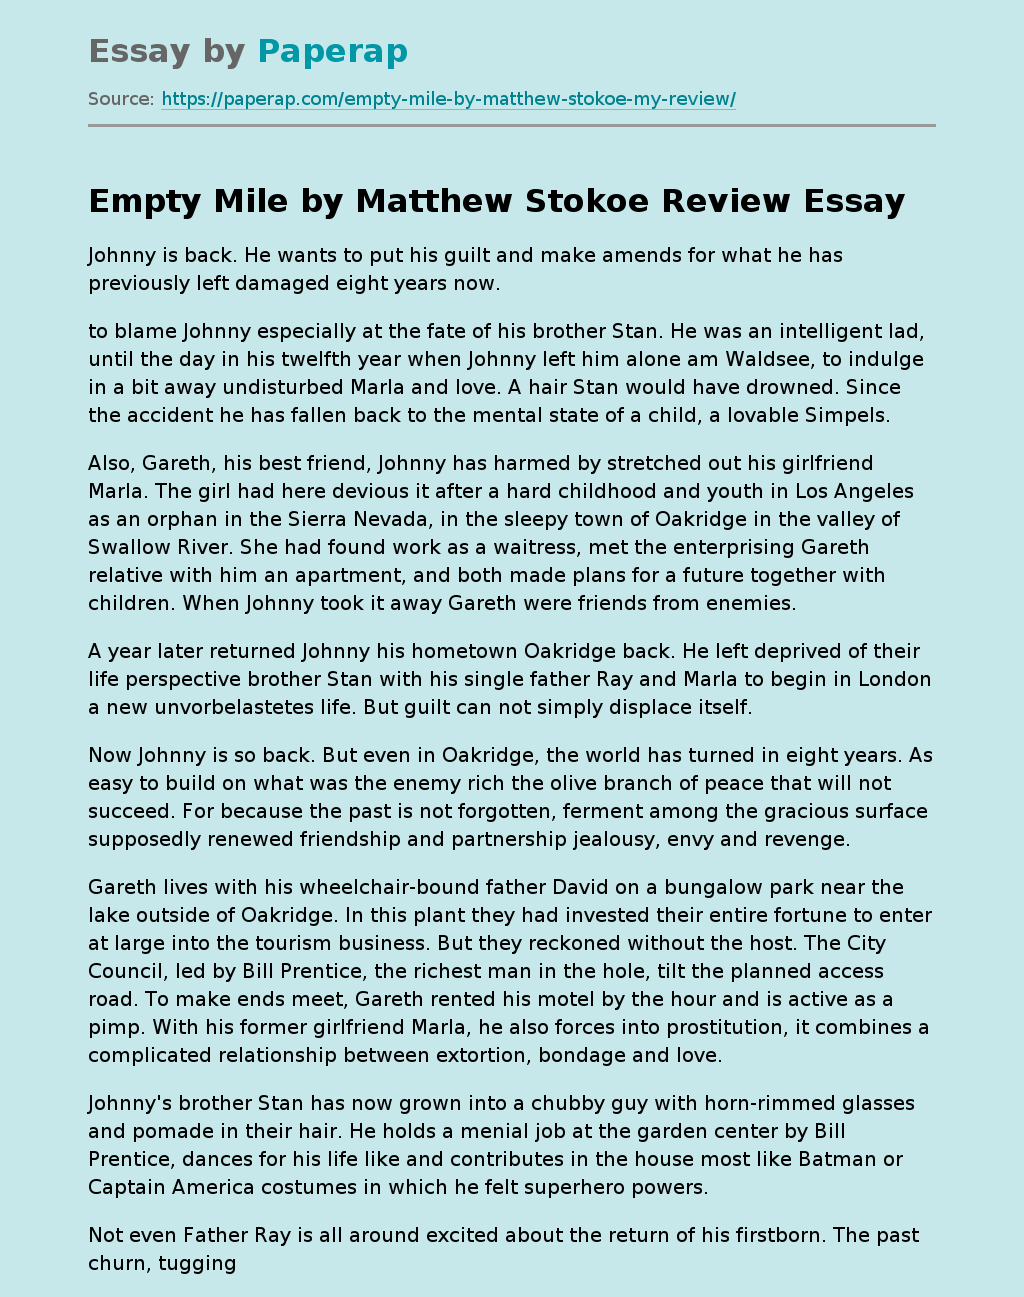 Novel "Empty Mile" by Matthew Stokoe